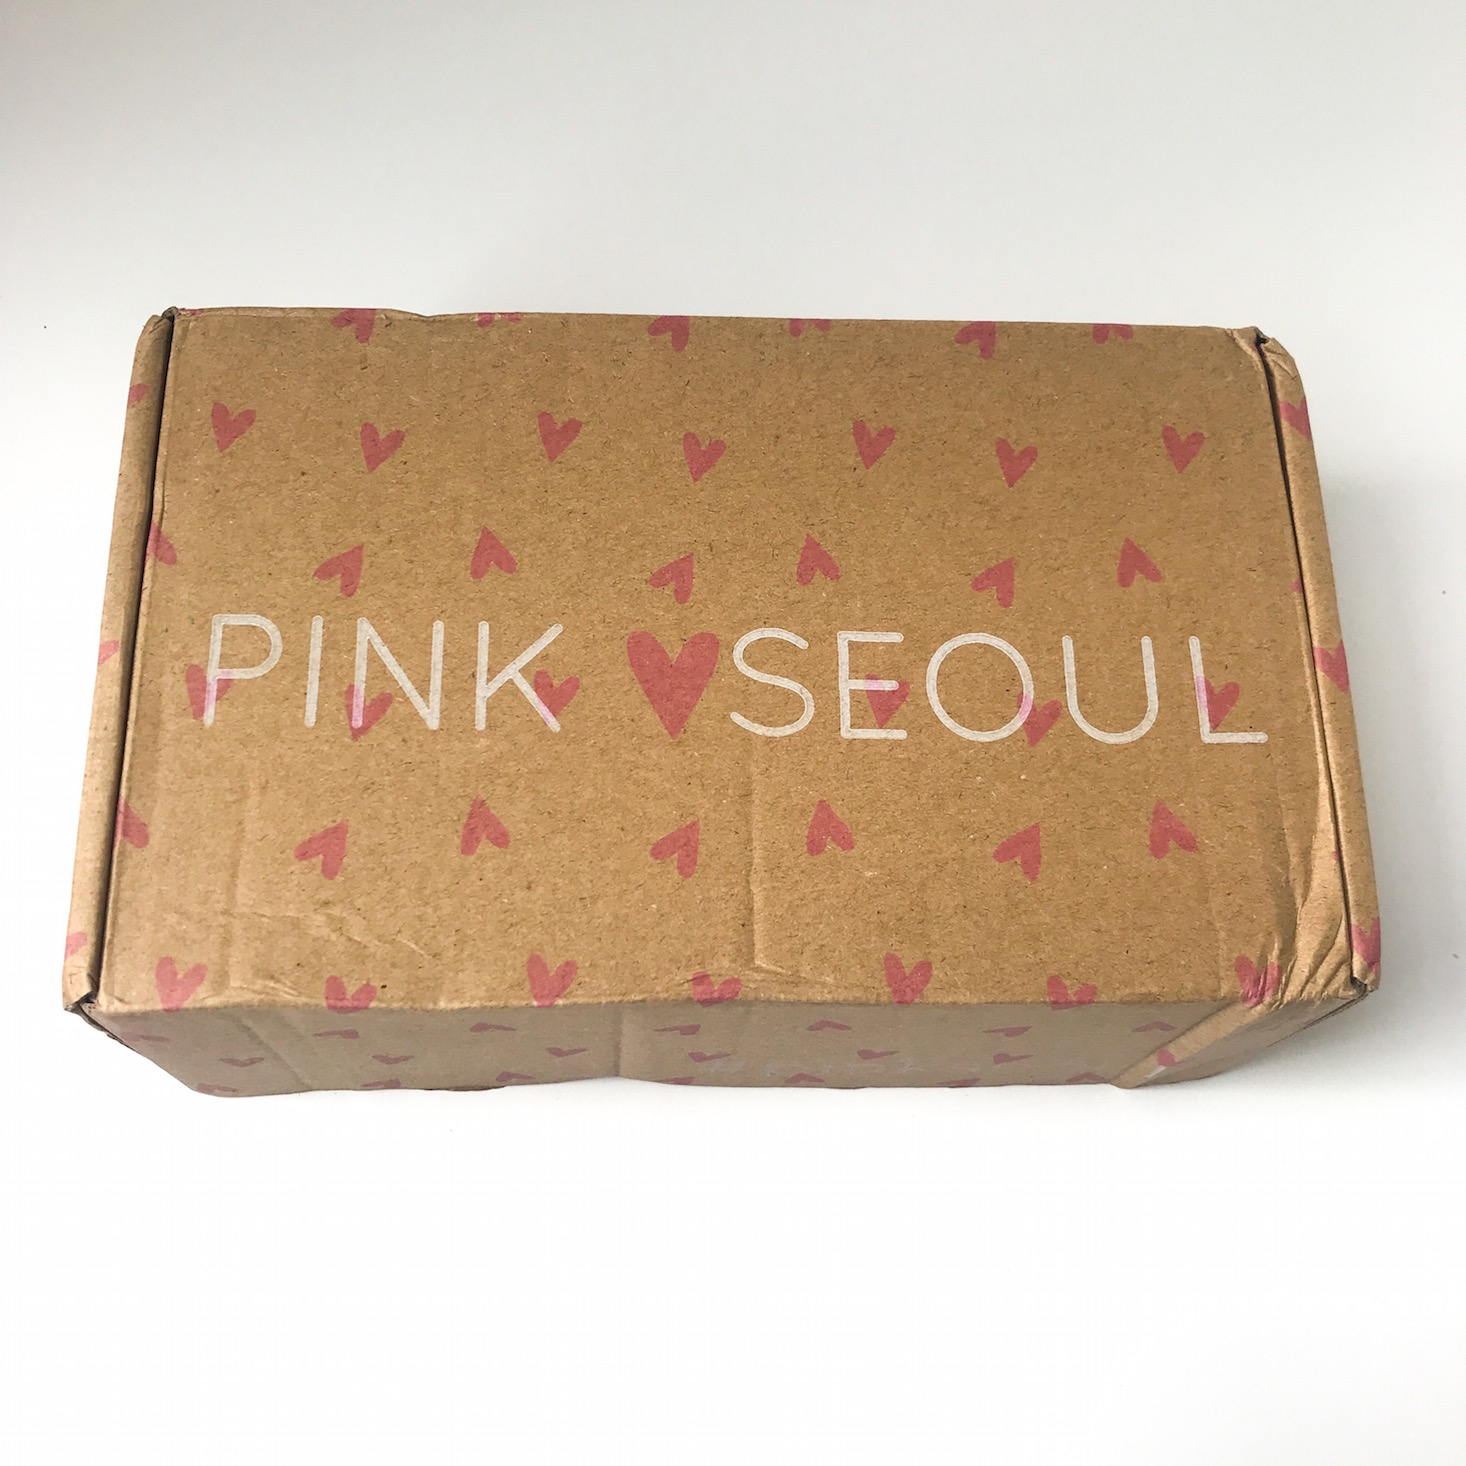 PinkSeoul K-Beauty Box Review + Coupon – October 2018